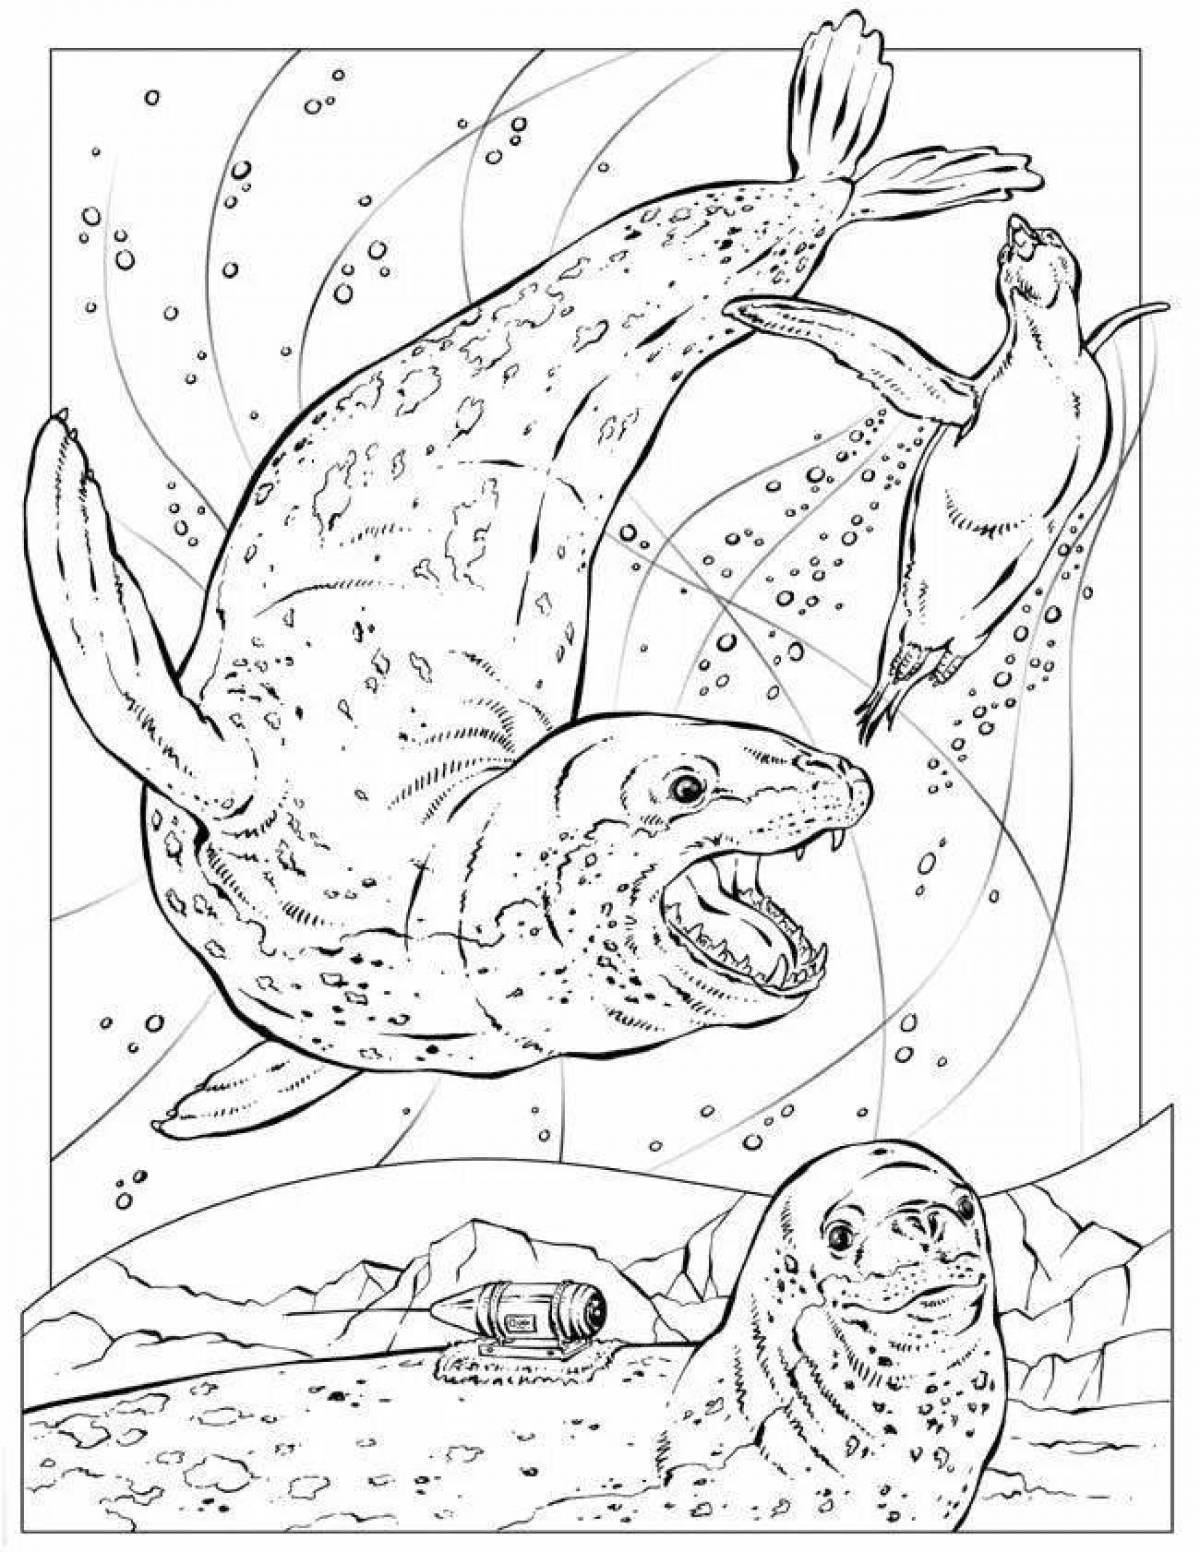 Leopard seal #4